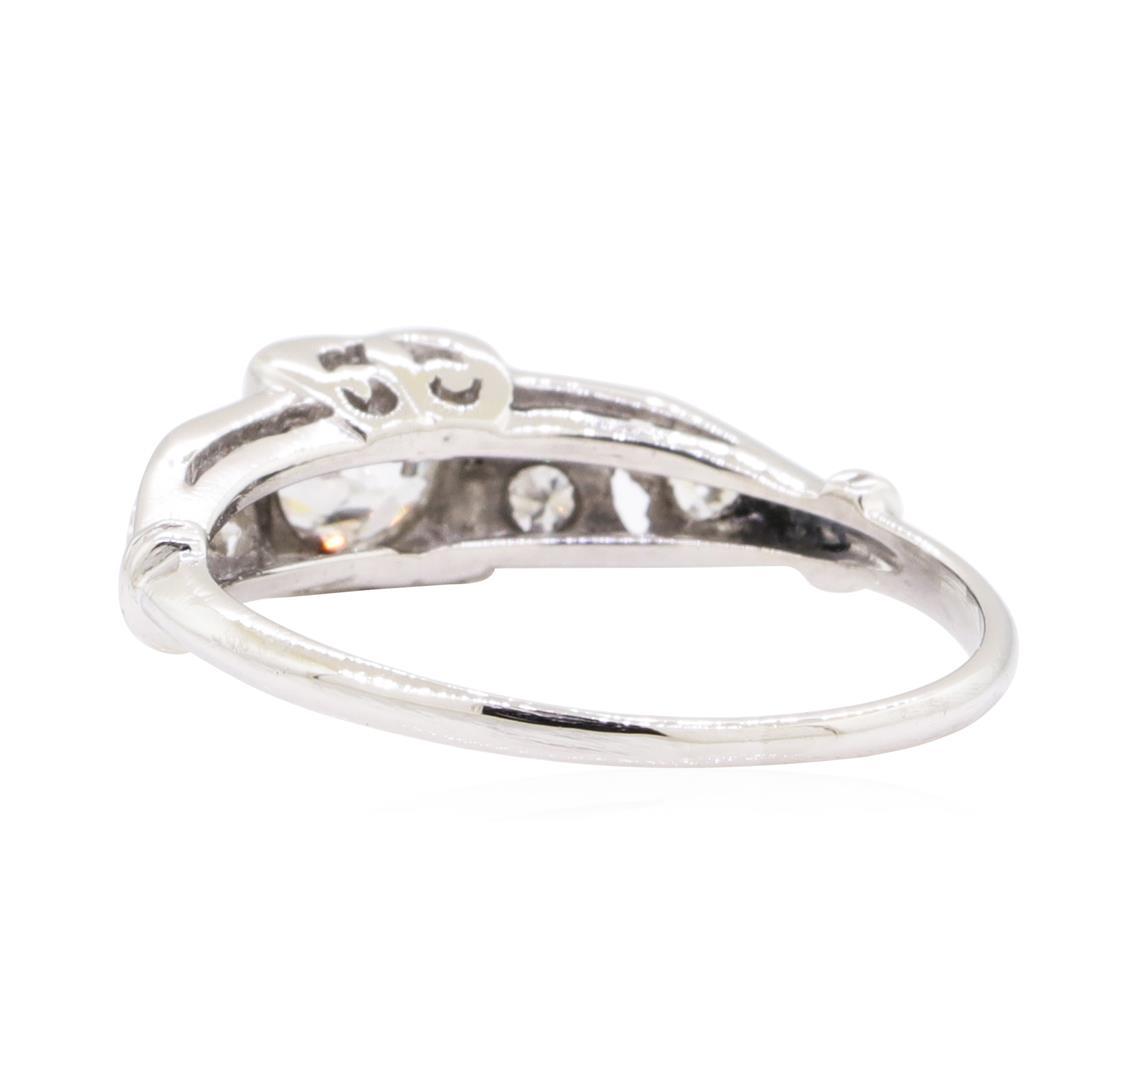 0.65 ctw Diamond Lady's Vintage Wedding Ring - Platinum